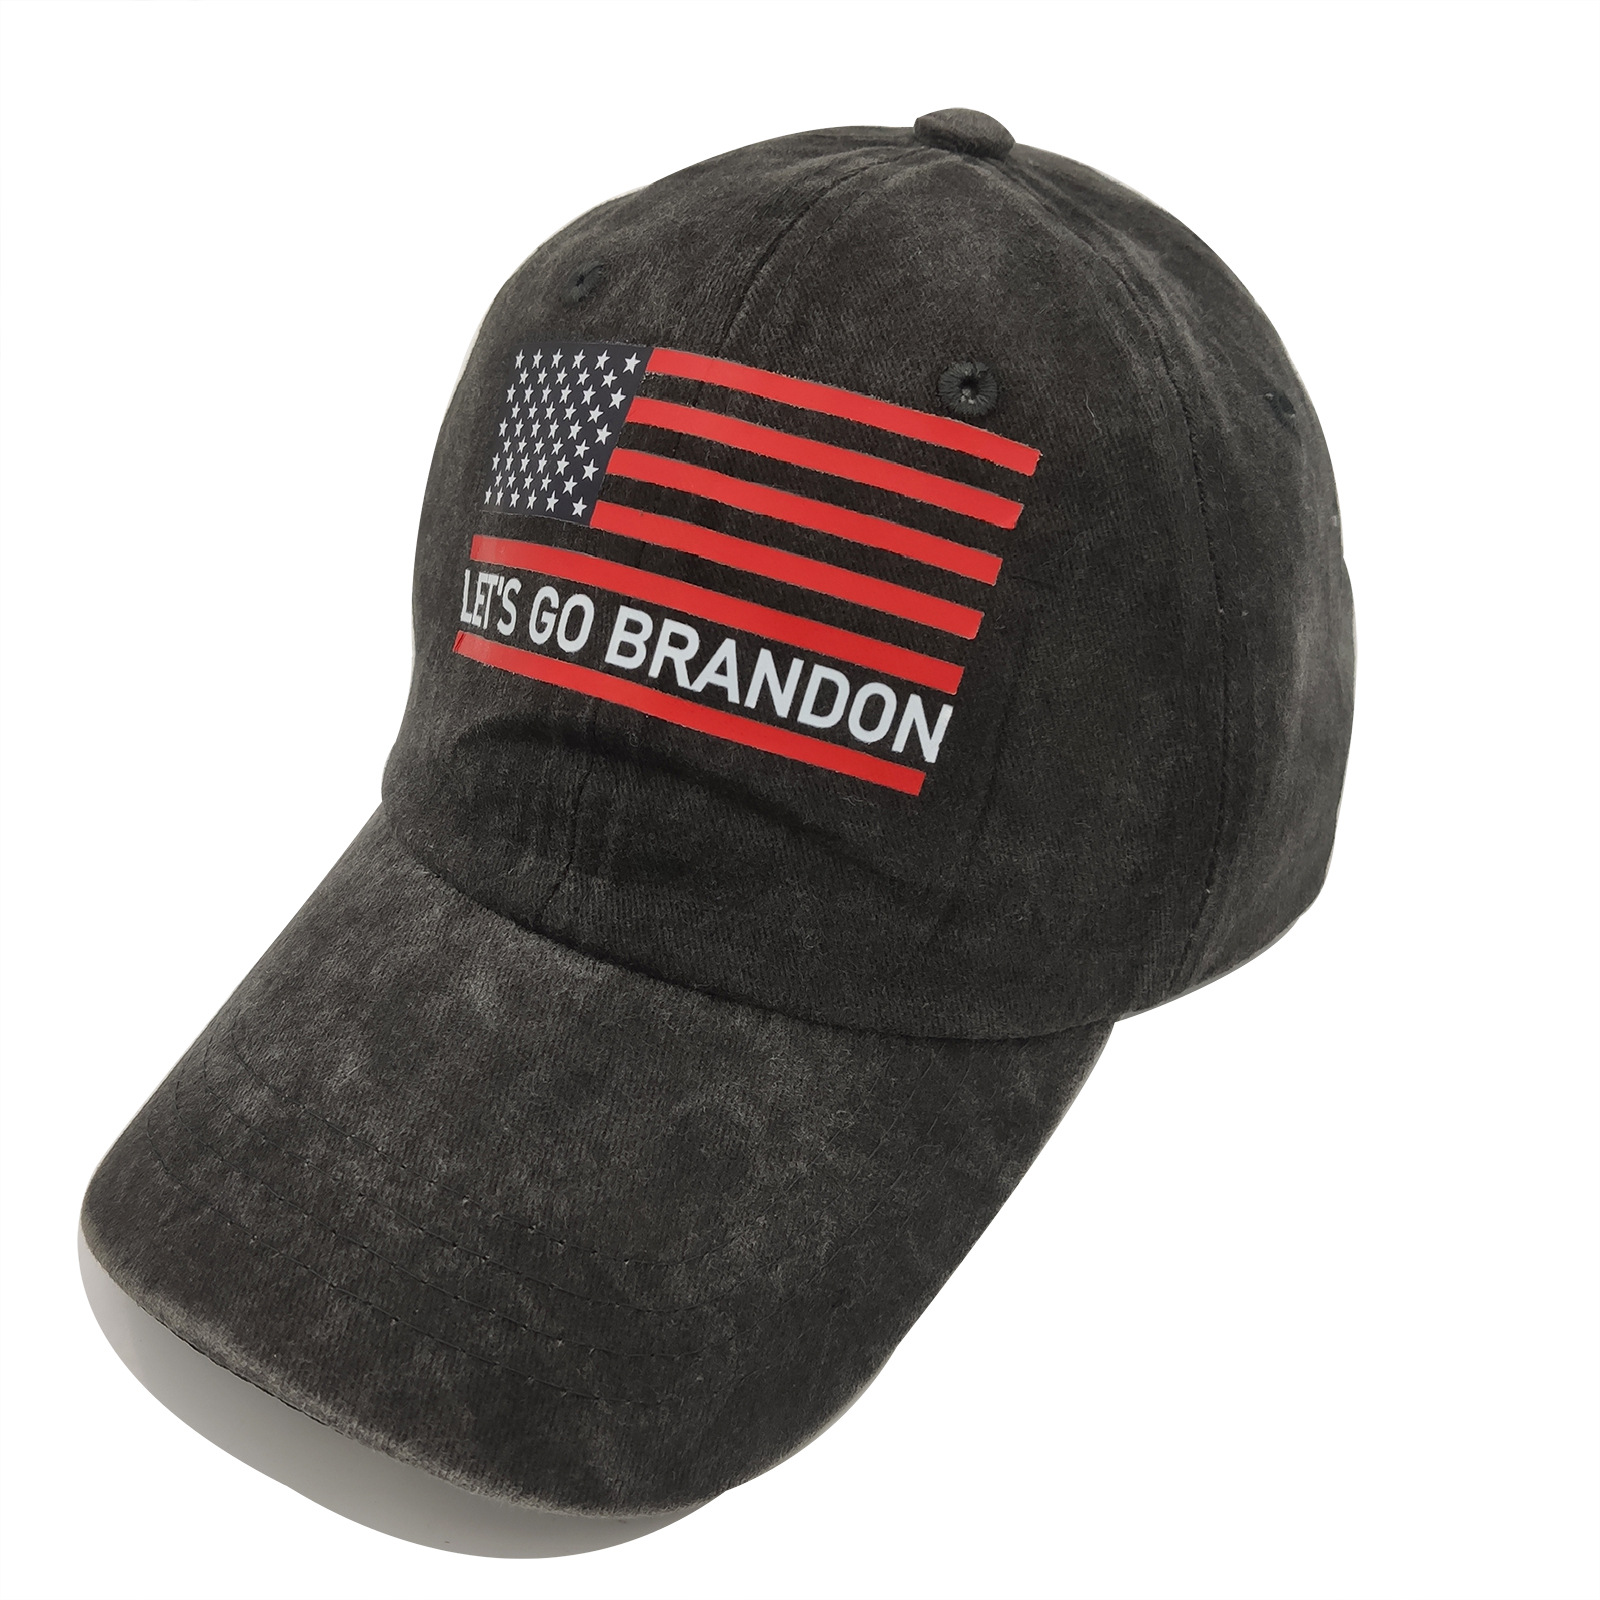 Washed Printed Baseball Cap Let's Go Brandon Adult Trucker Hat Dad Cap Peaked Cap